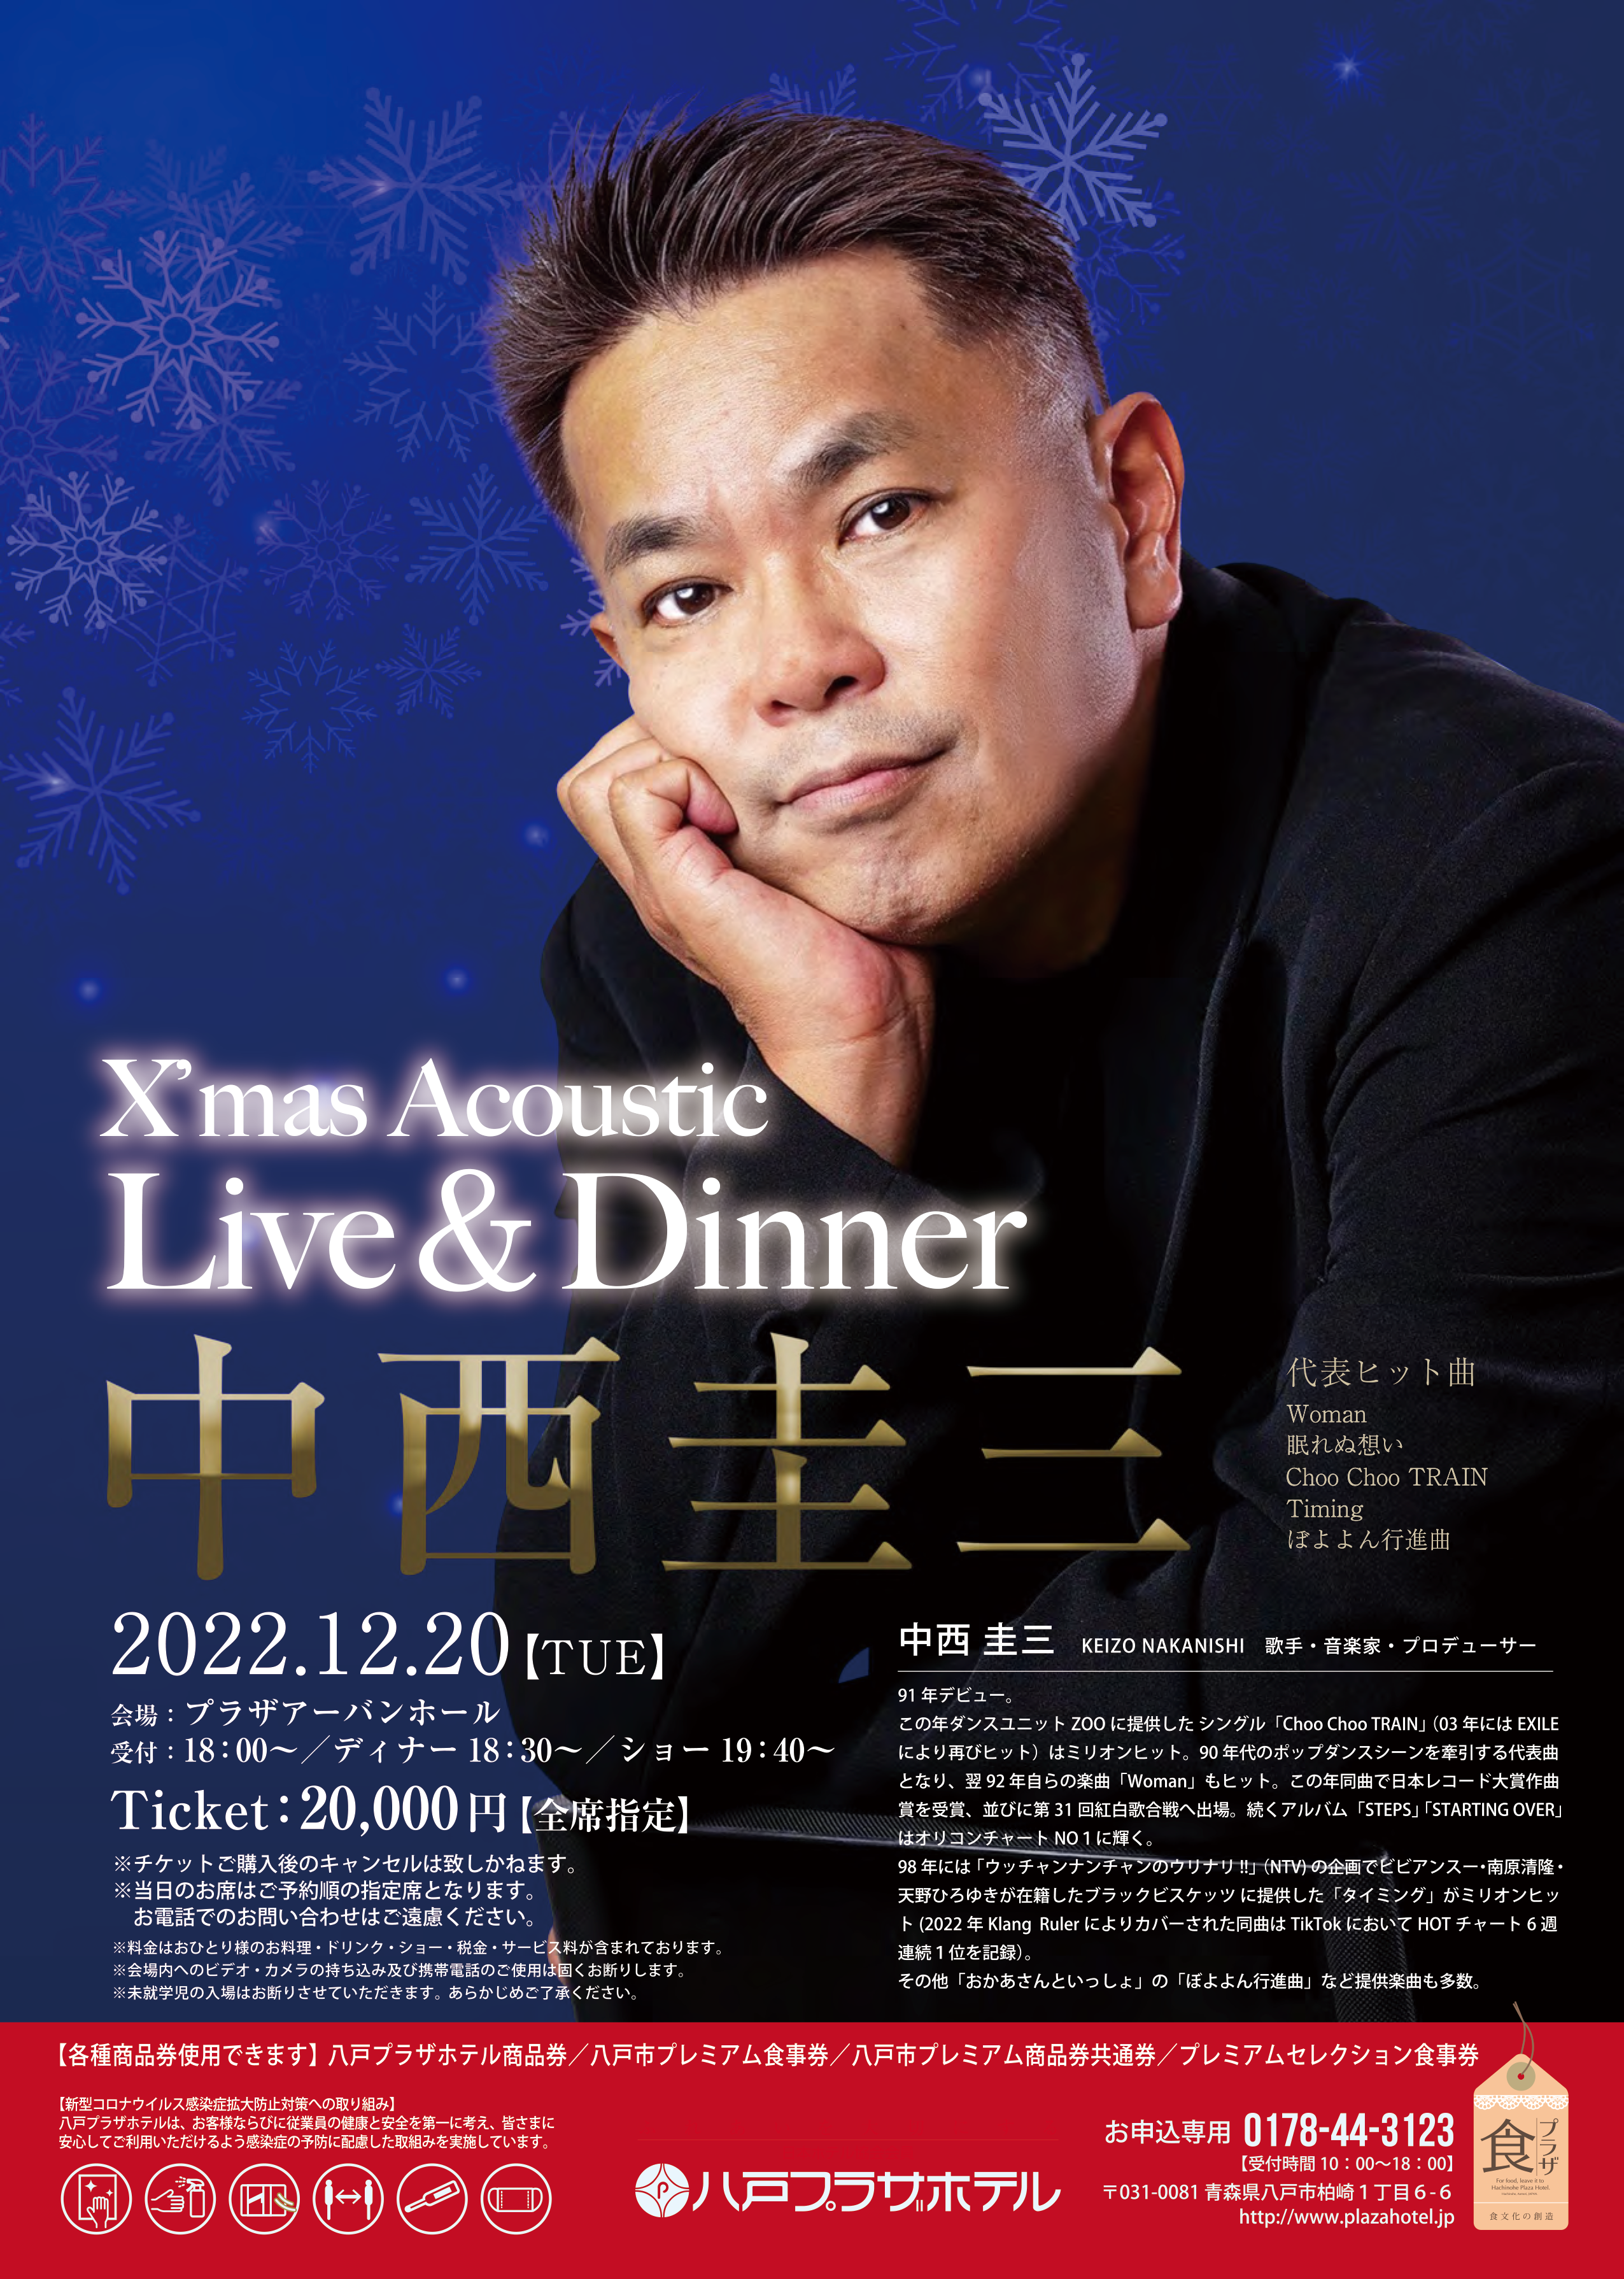 Xmas Acoustic Live & Dinner 中西圭三